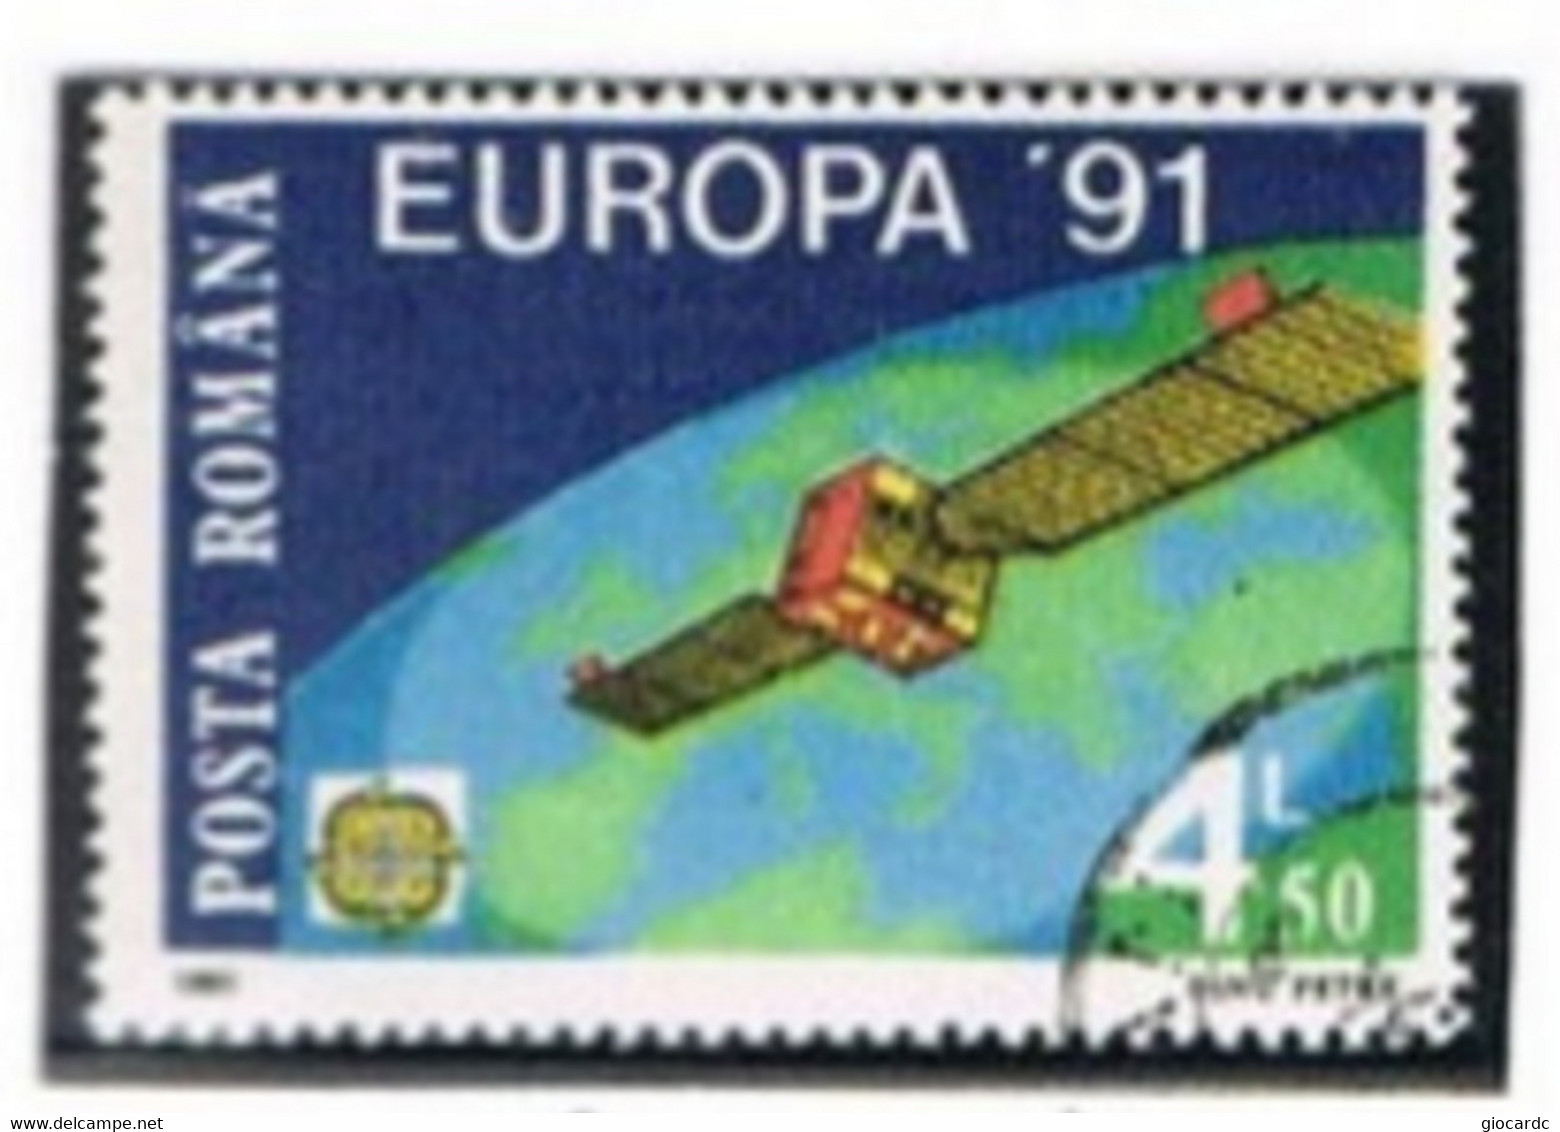 ROMANIA   - SG 5334   -  1991 EUROPA: EUTELSAT 1  - USED ° - Gebraucht